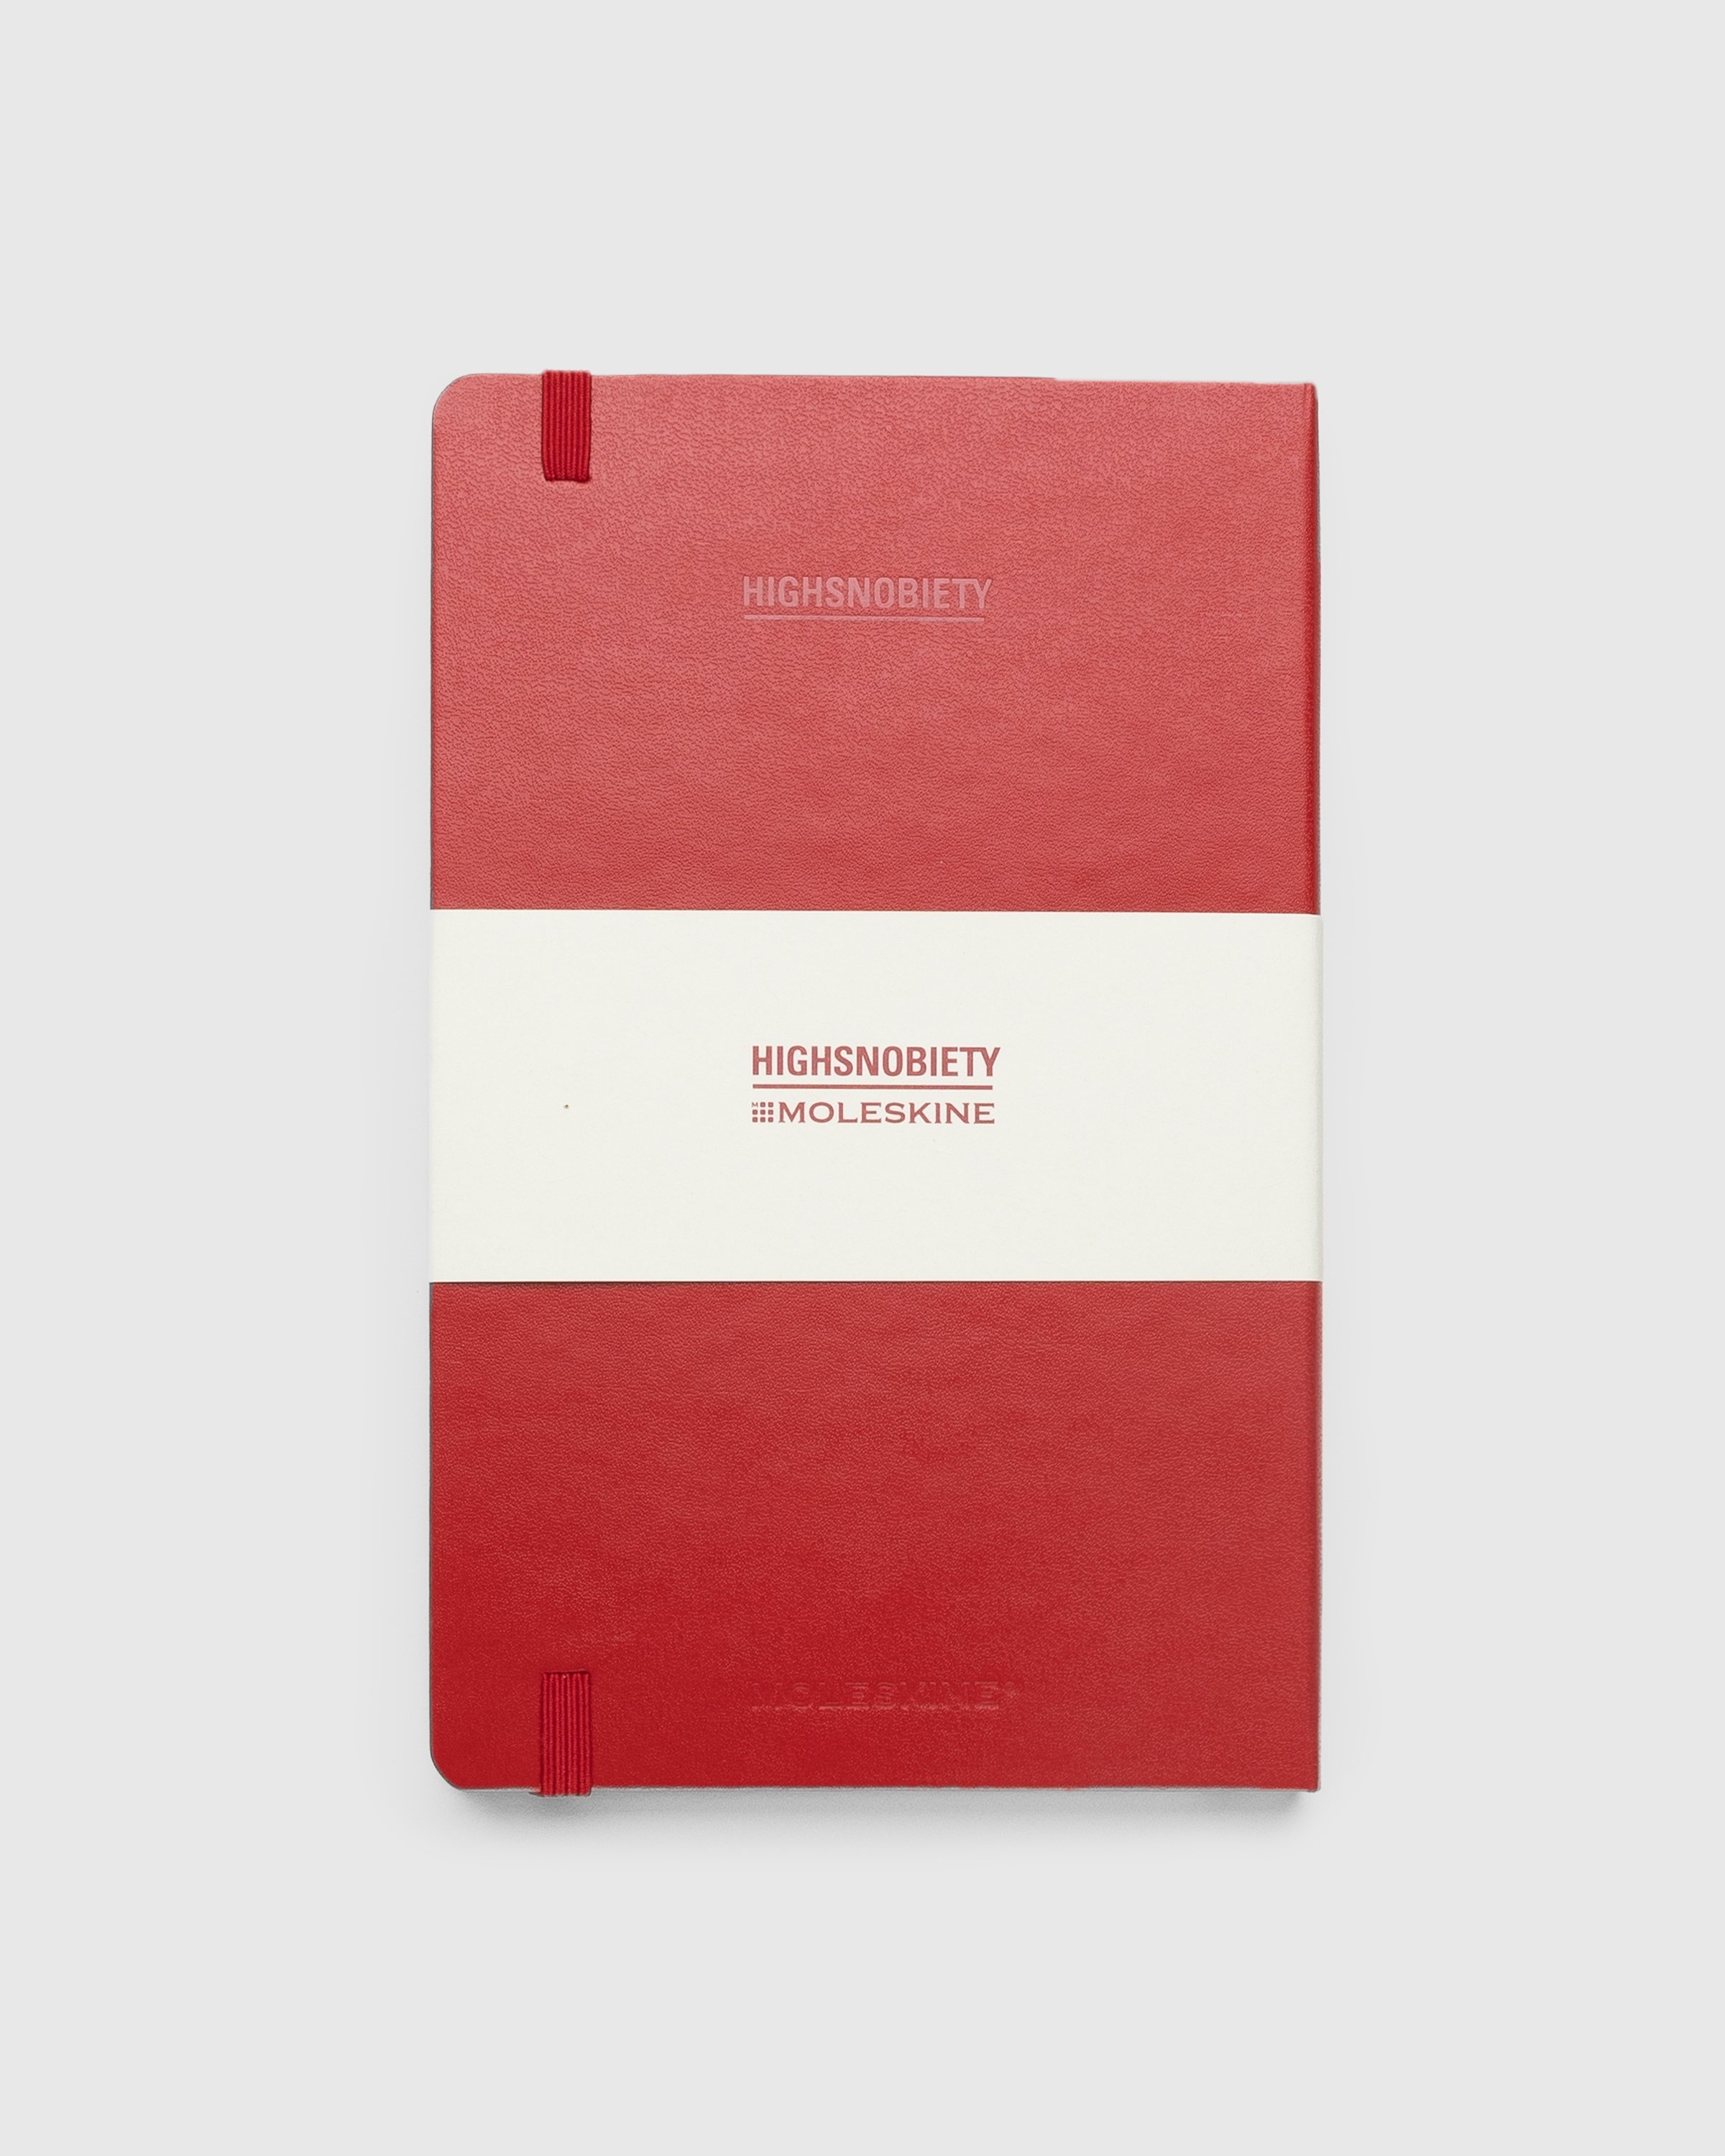 Moleskine x Highsnobiety – Limited Edition Notebook - Stationary - Red - Image 2